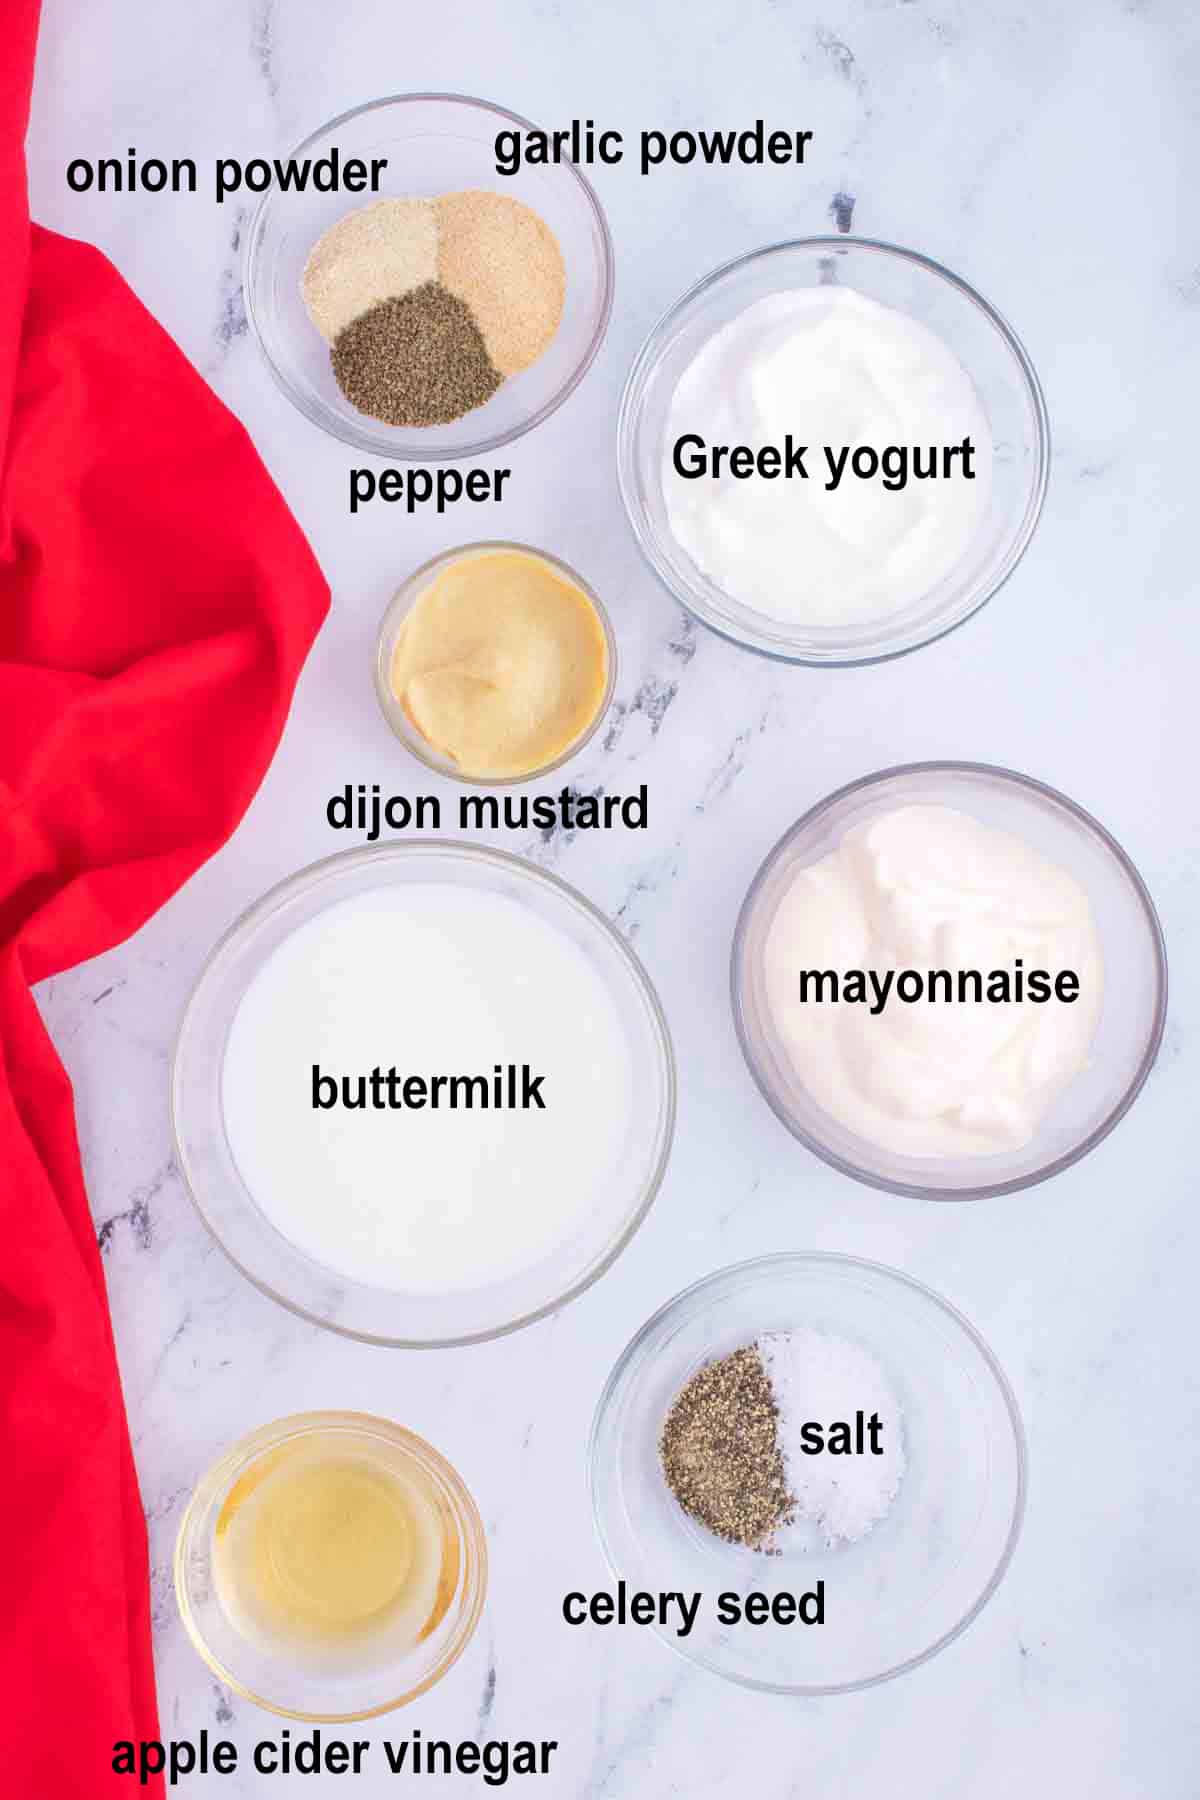 onion powder, garlic powder, pepper, greek yogurt, dijon mustard, mayonnaise, butter milk, salt, celery seed, apple cider vinegar.